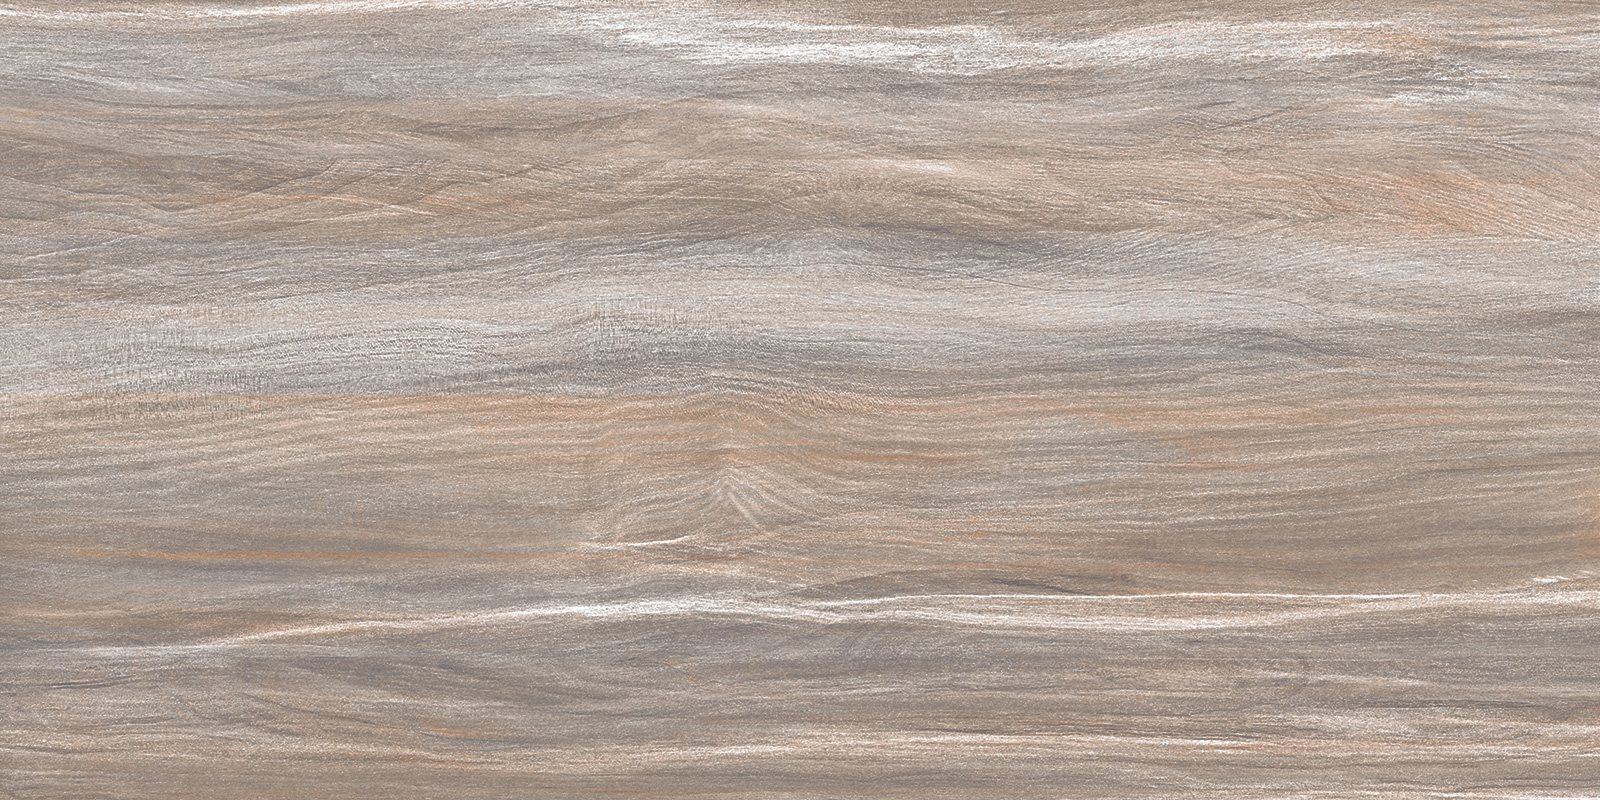 Настенная плитка AltaCera Esprit Wood 25x50 плитка настенная altacera islandia wood 24 9x50 см